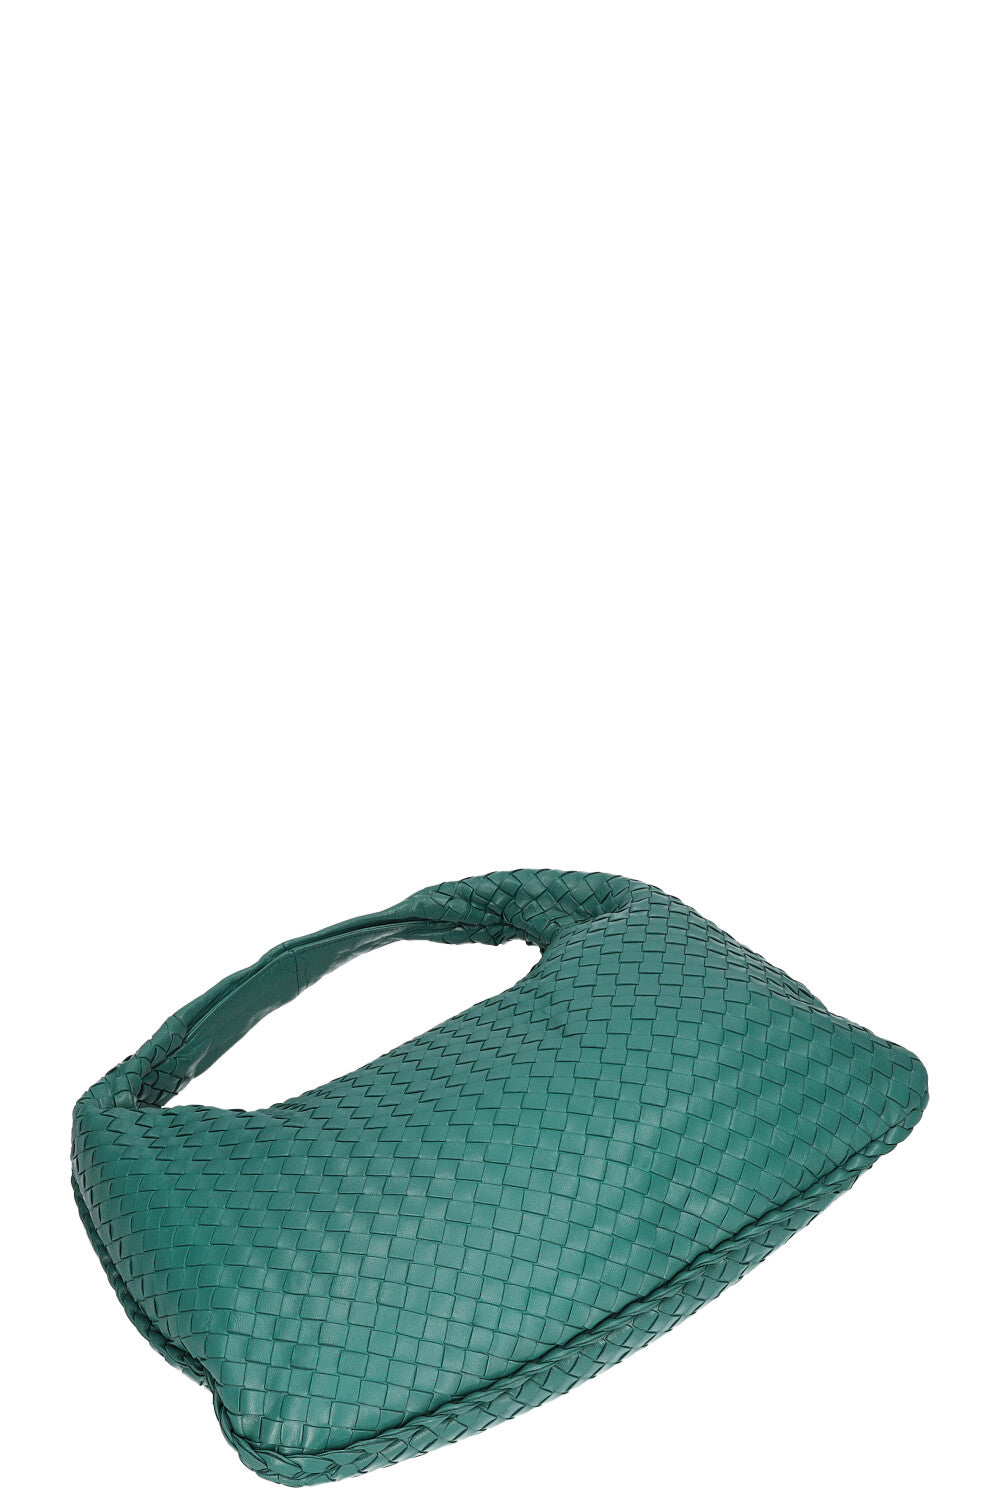 BOTTEGA VENETA Hobo Bag Intrecciato Emerald